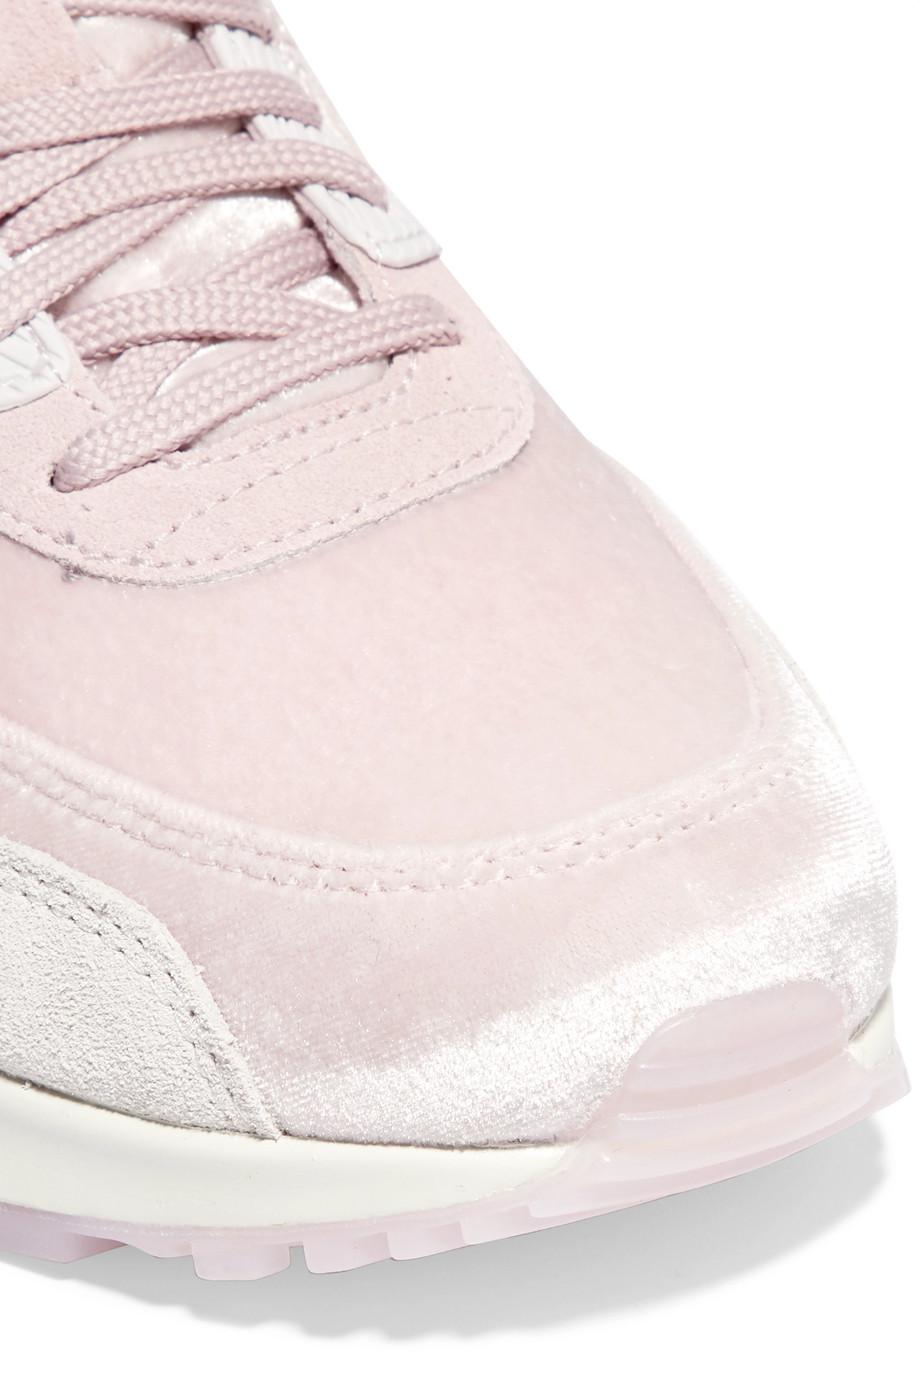 Nike Air Lx Velvet And Suede Sneakers in Pink | Lyst